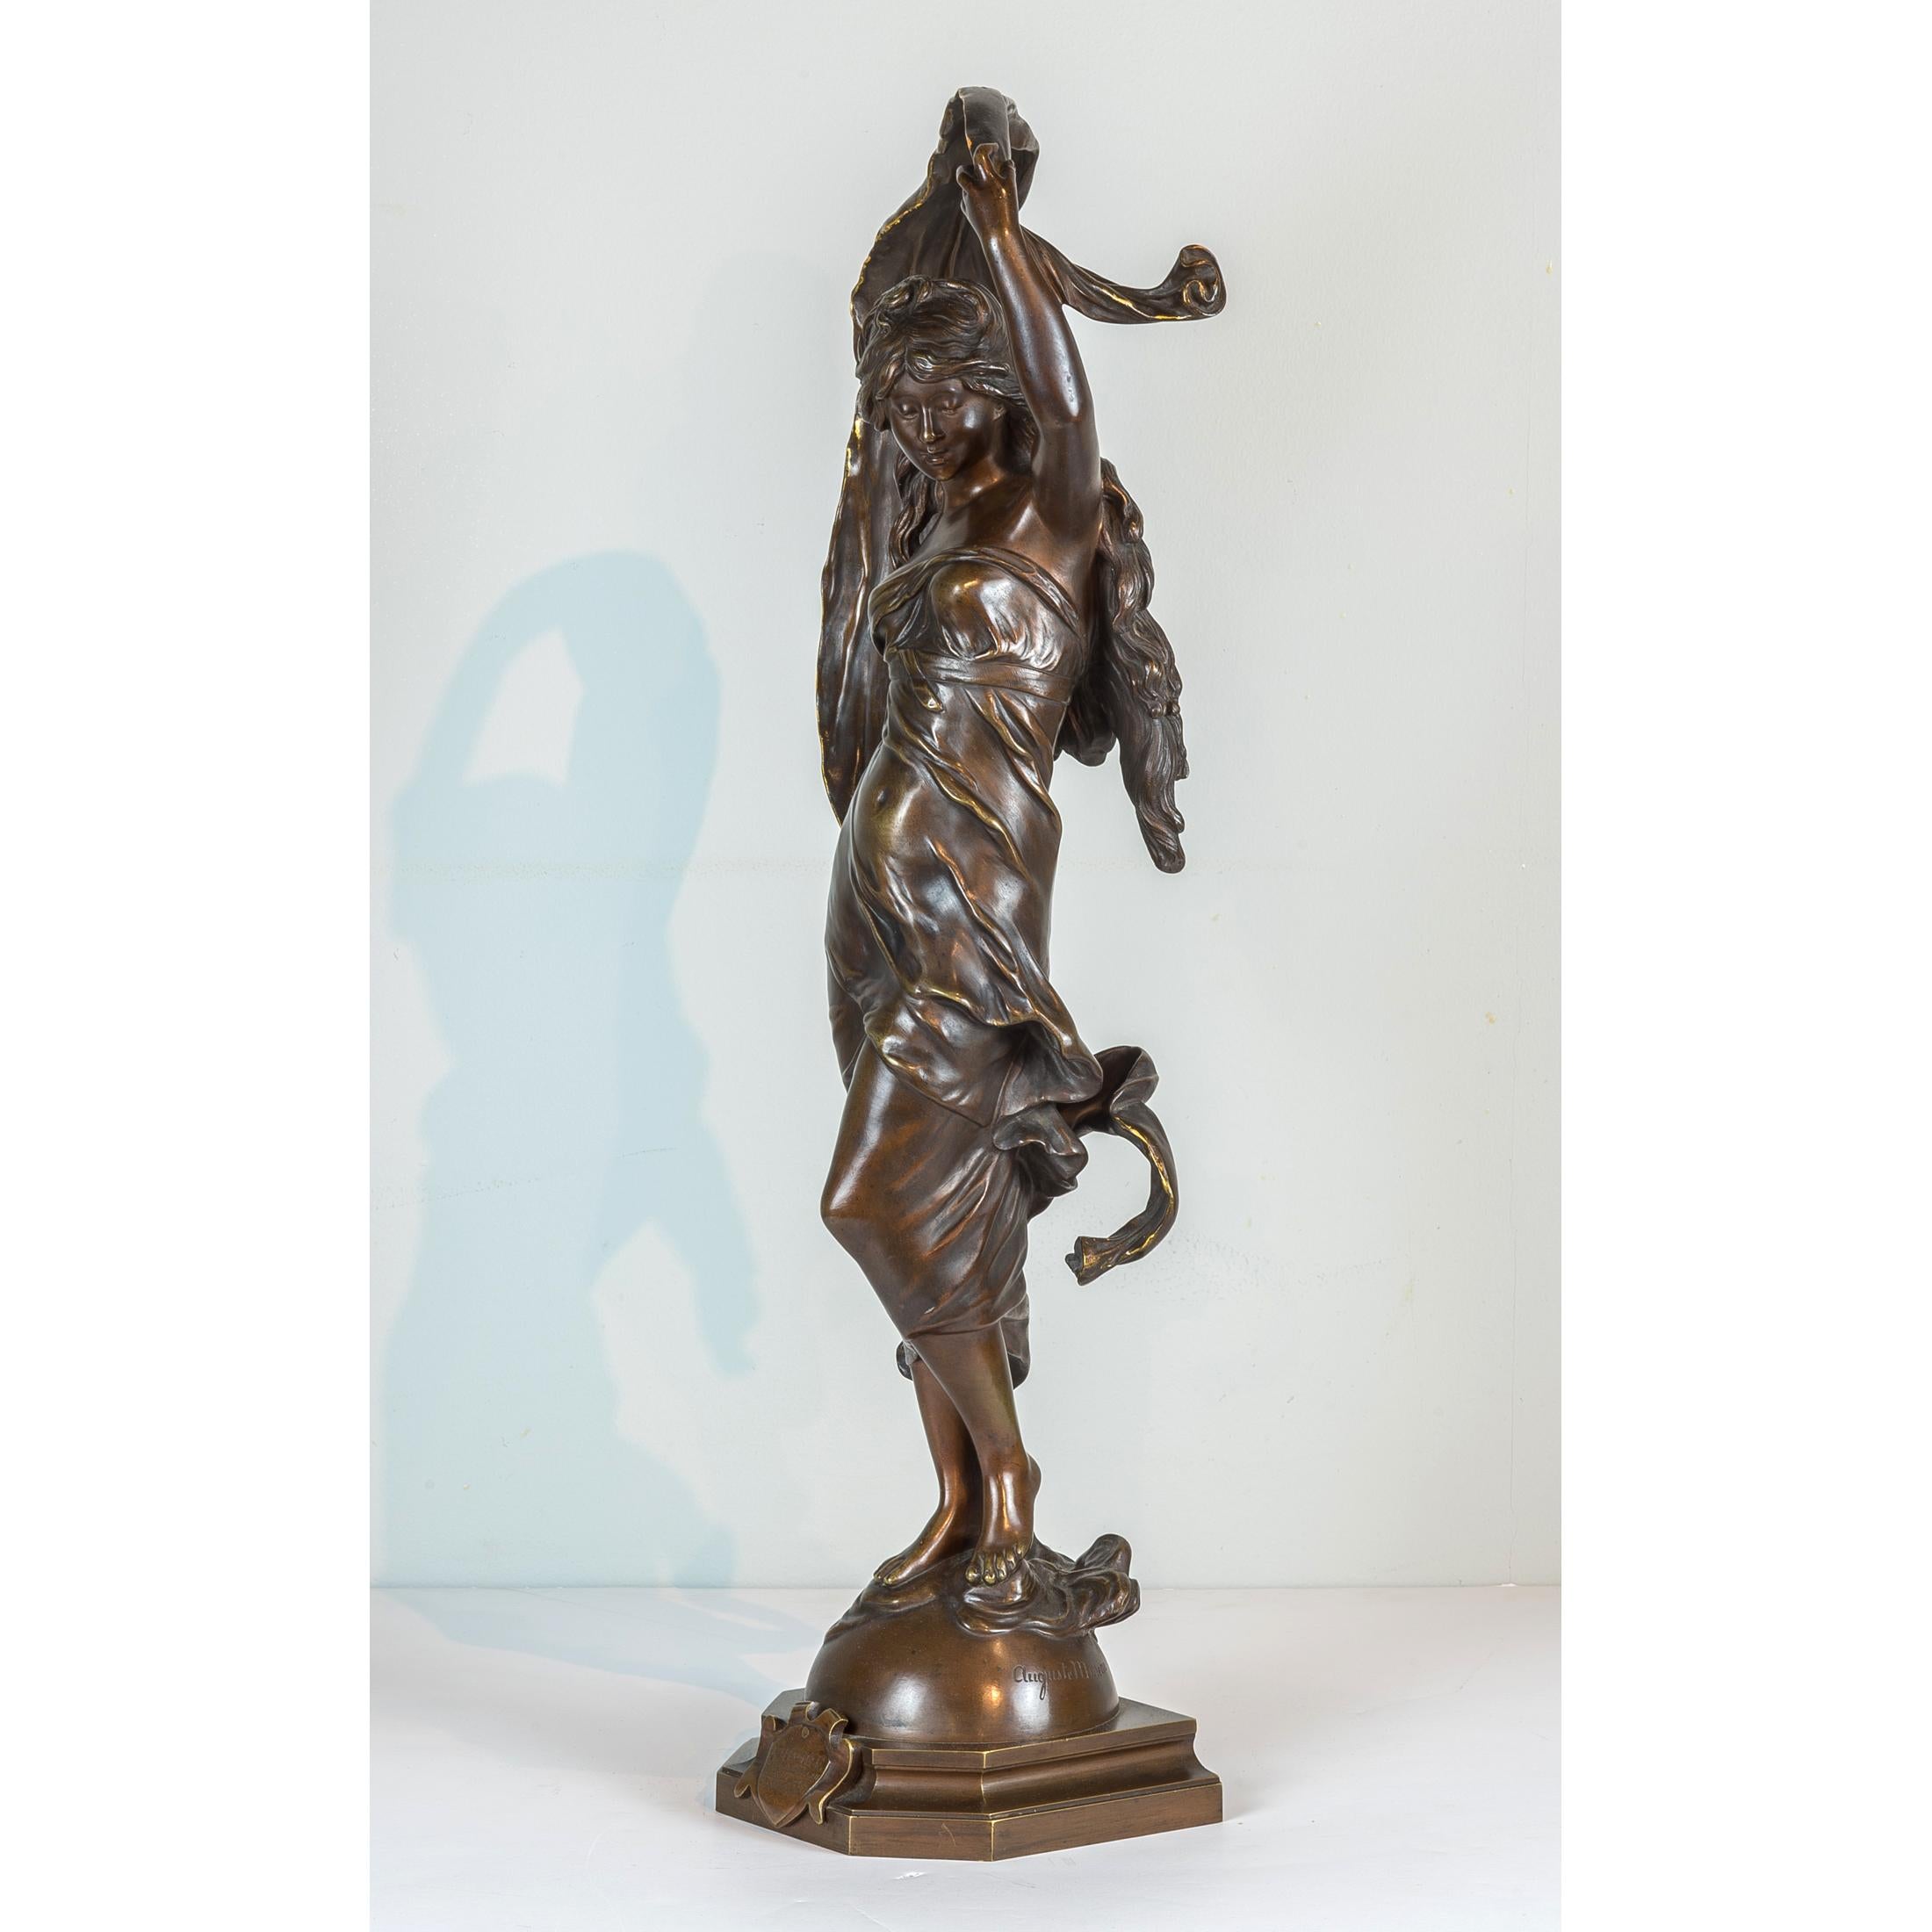 A Fine Patinated Bronze Statue Entitled ‘AURORE’ by Auguste Moreau - Sculpture by Louis Auguste Moreau